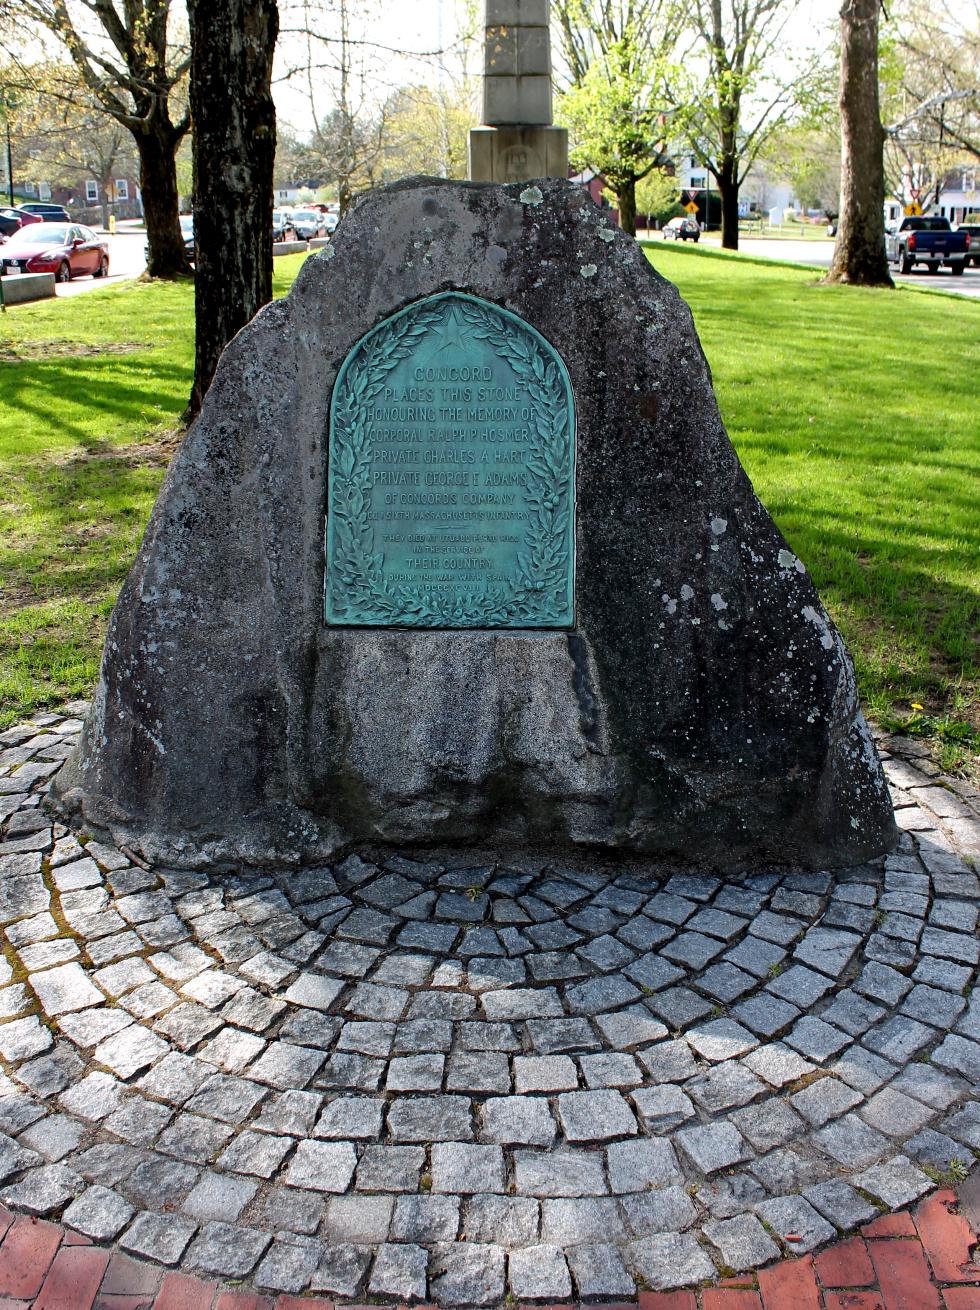 Concord Massachusetts Spanish American War Memorial